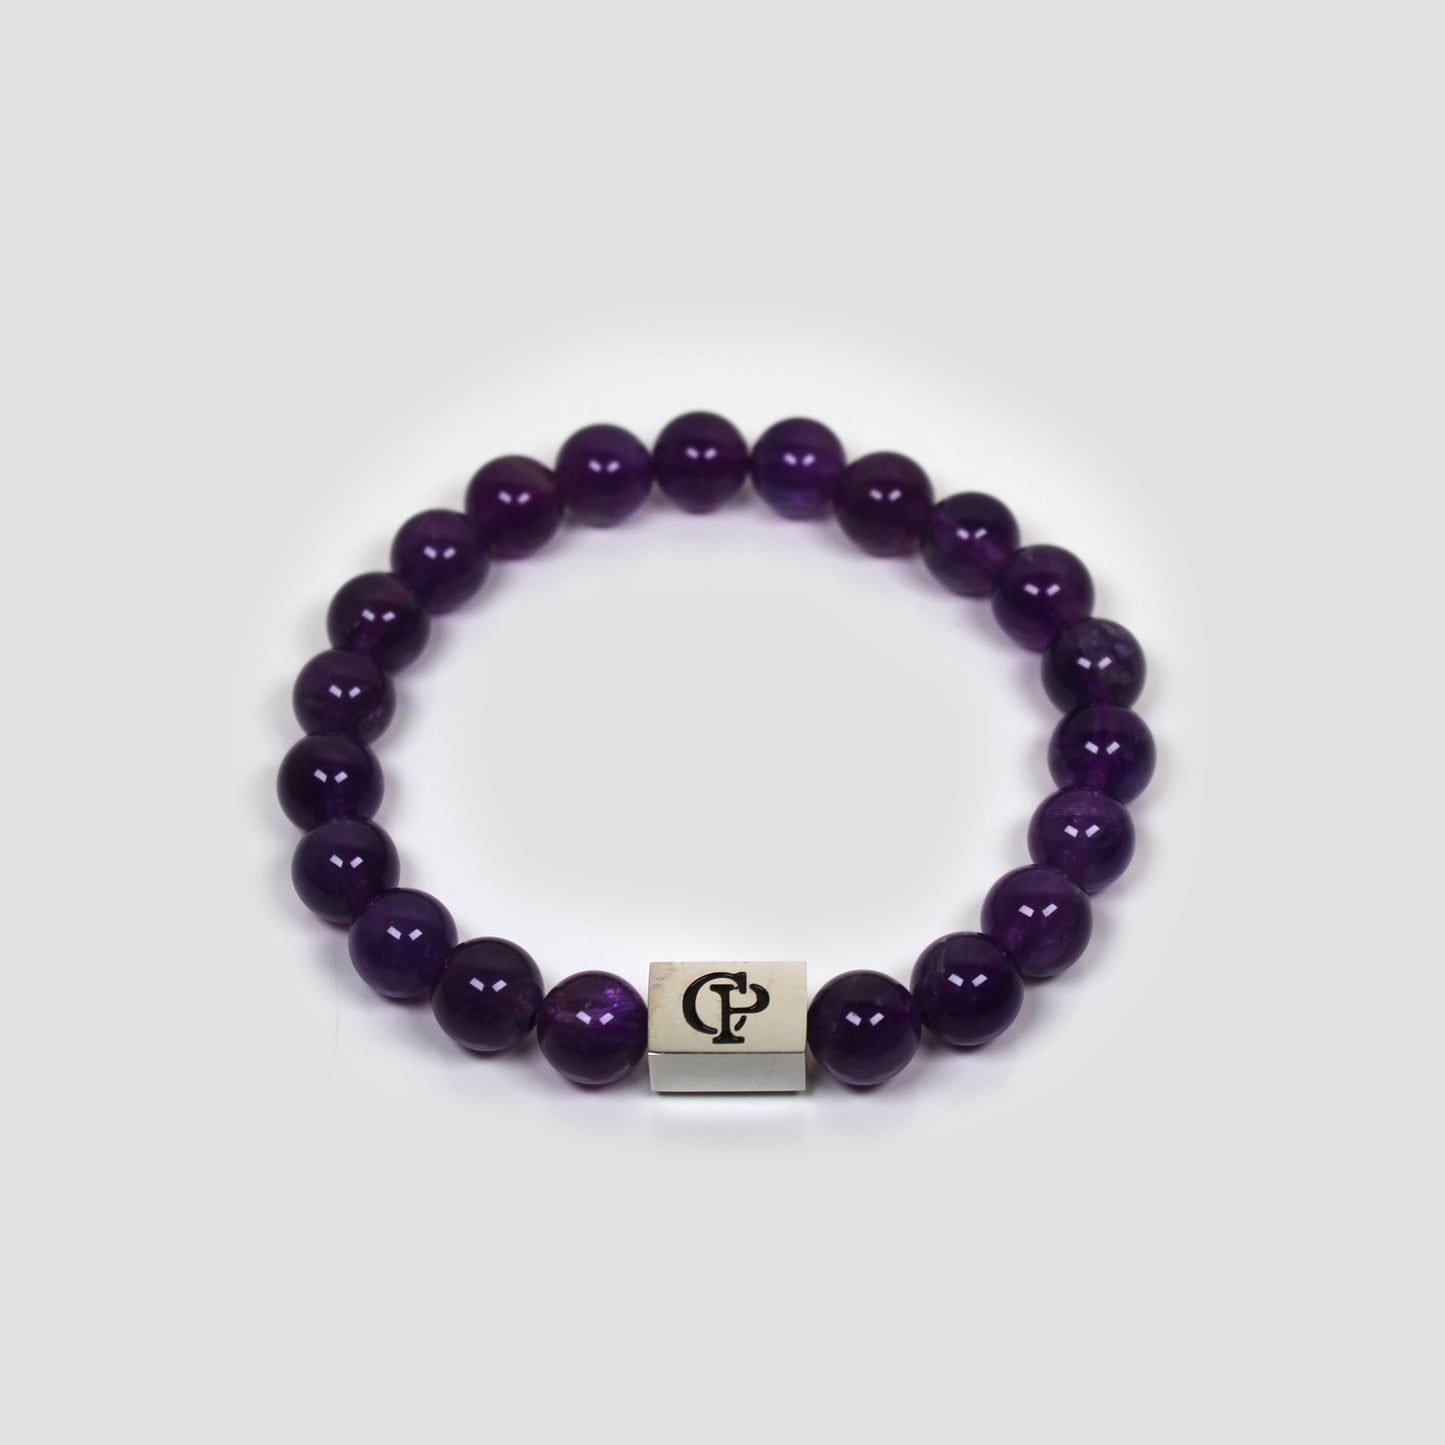 Purple Amethyst bracelet on a gray surface.